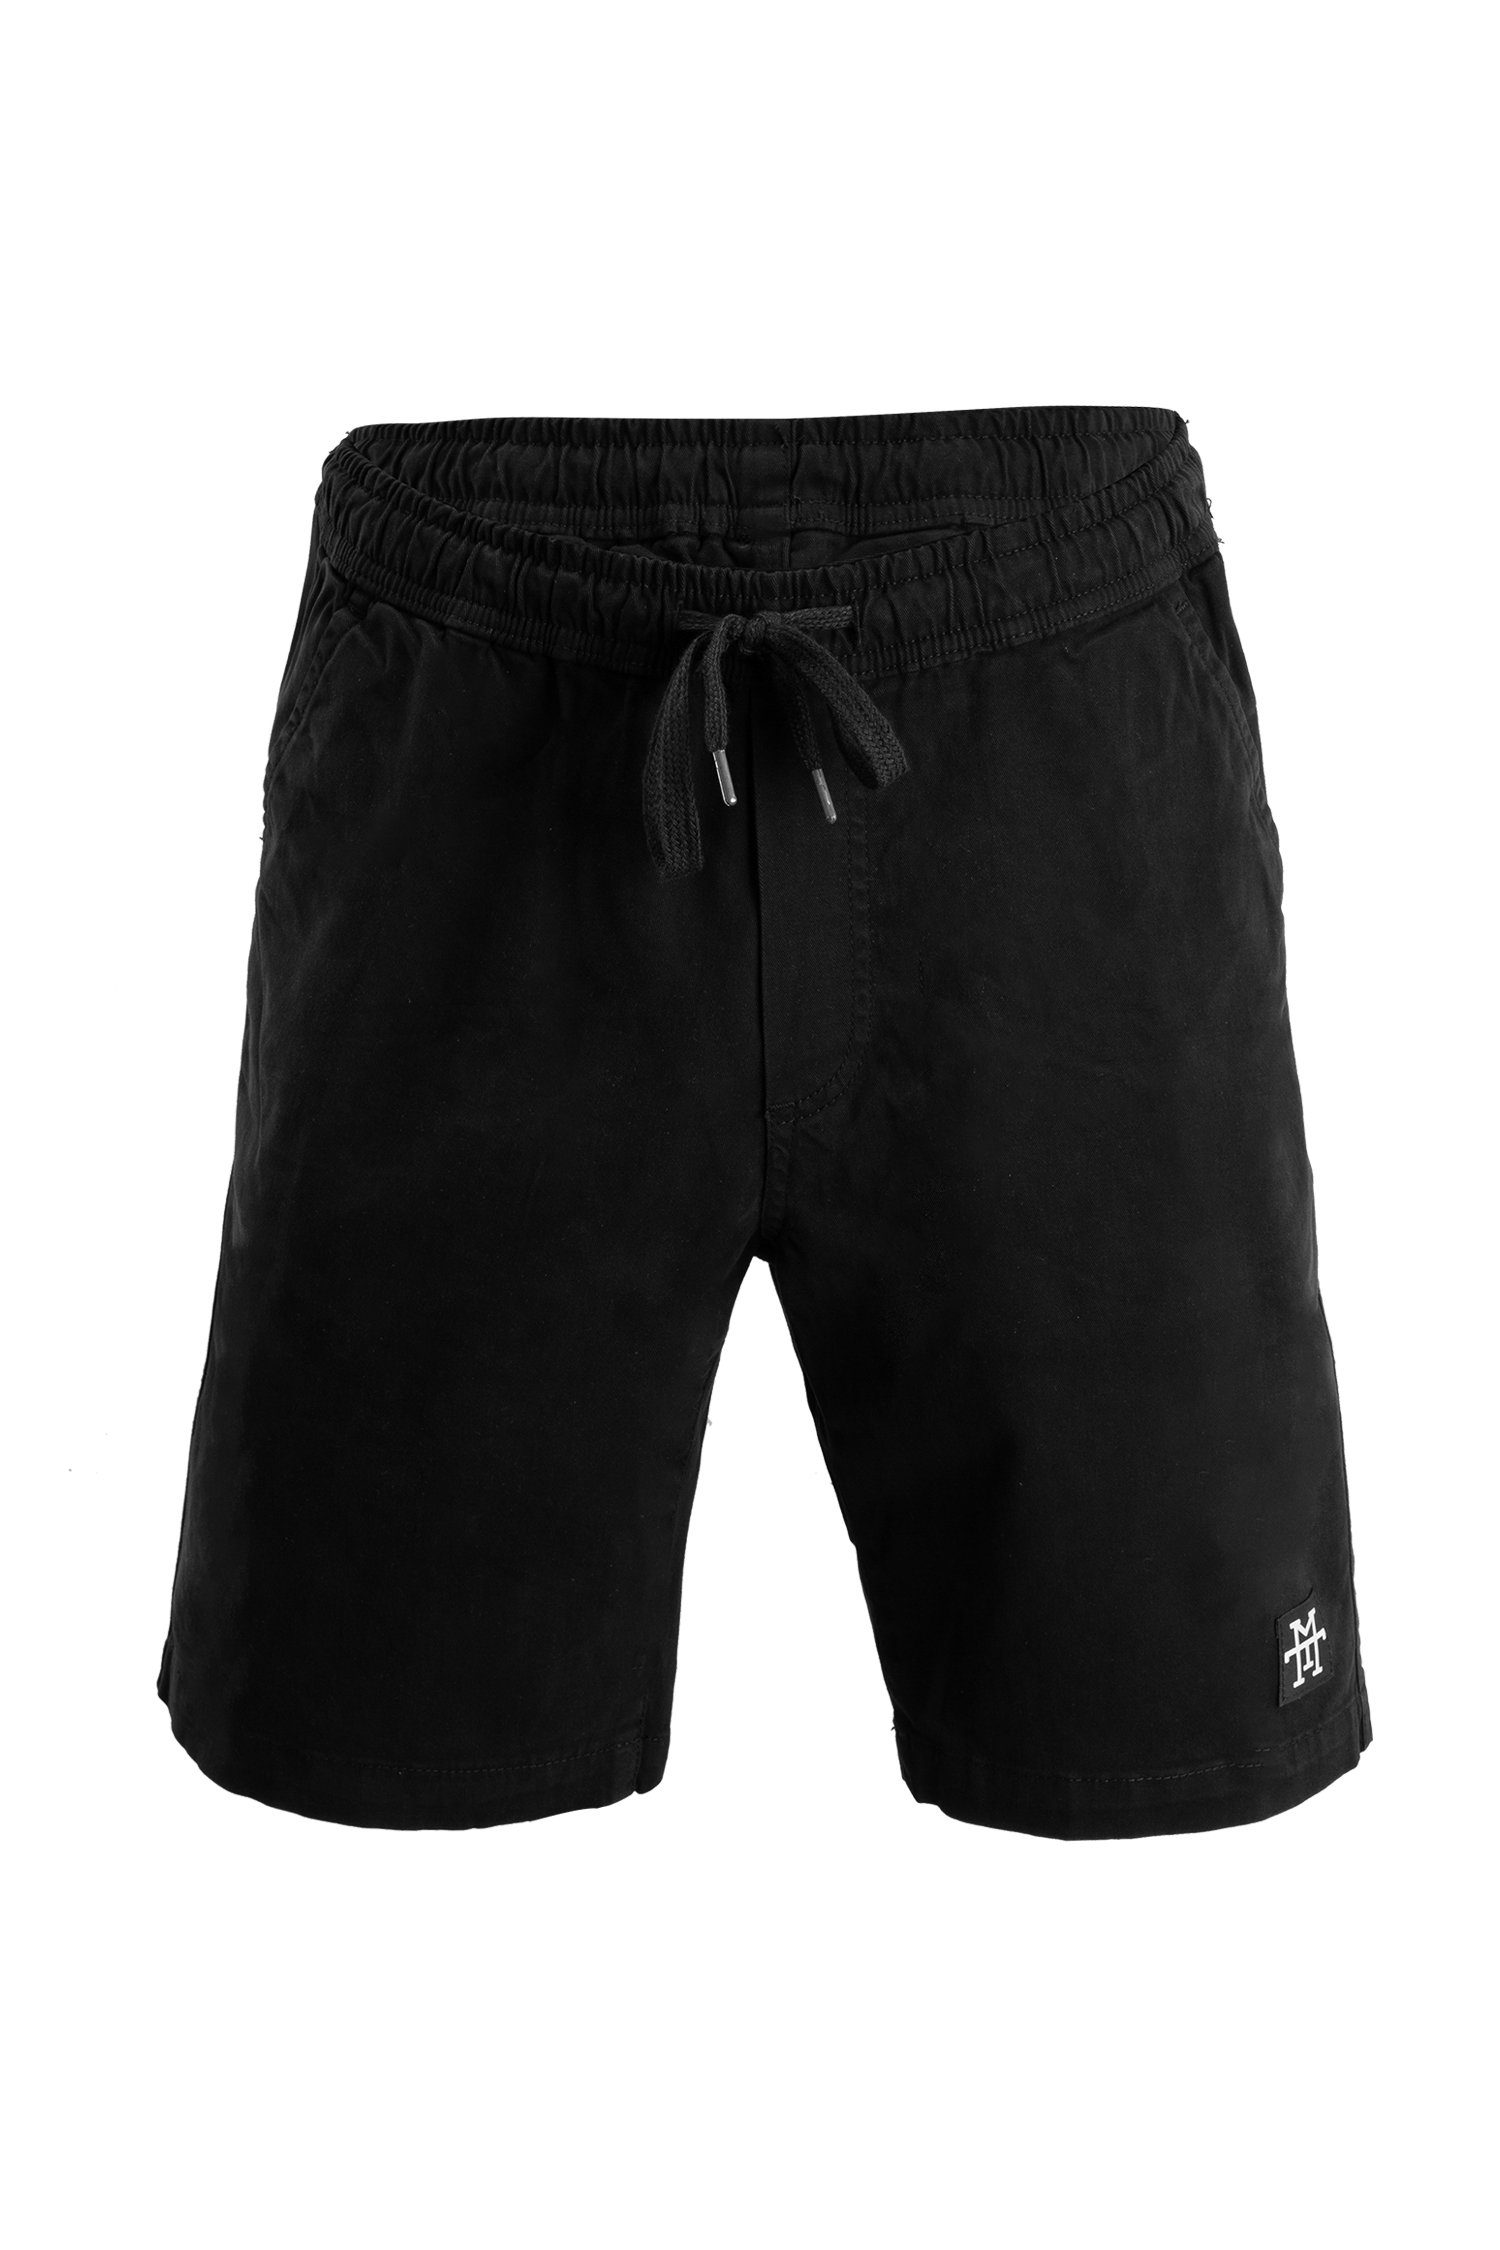 Manufaktur13 Chinoshorts Chino Shorts - Kurze Hose aus dehnbarem Stretch Twill mit Kordelzug / Tunnelzug Black